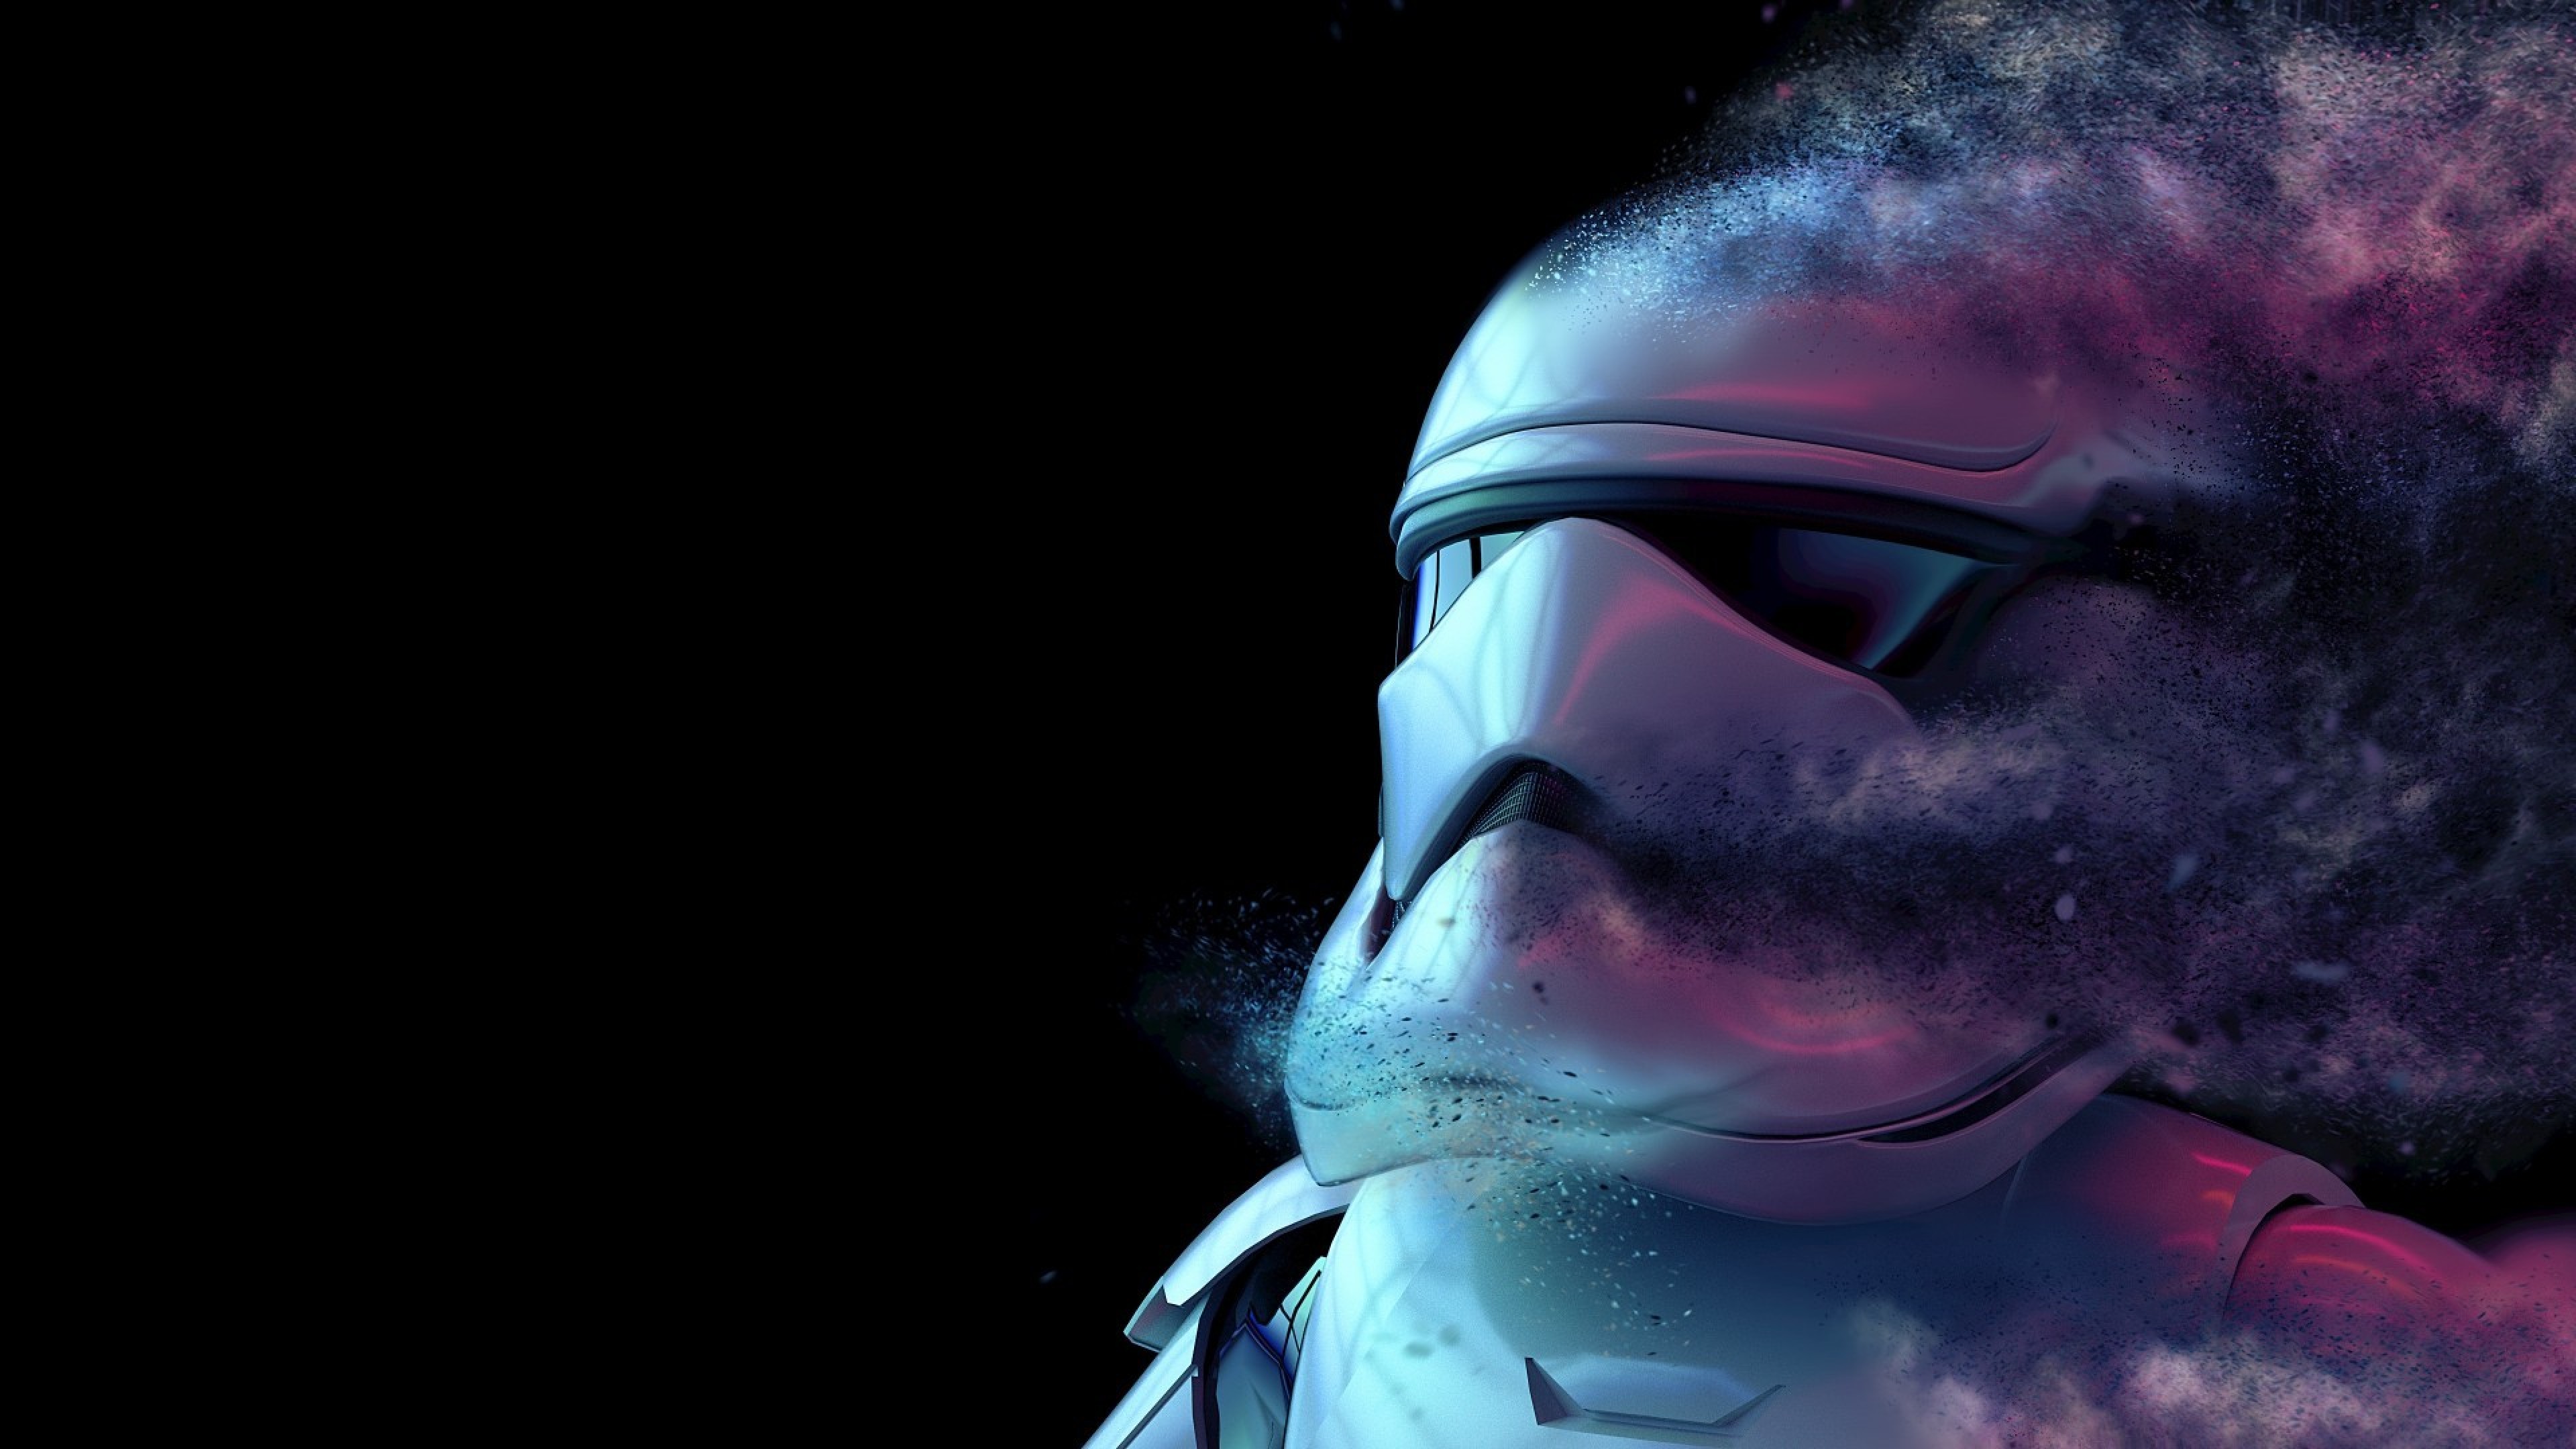 Stormtrooper From Star Wars HD Wallpaper 4k Ultra